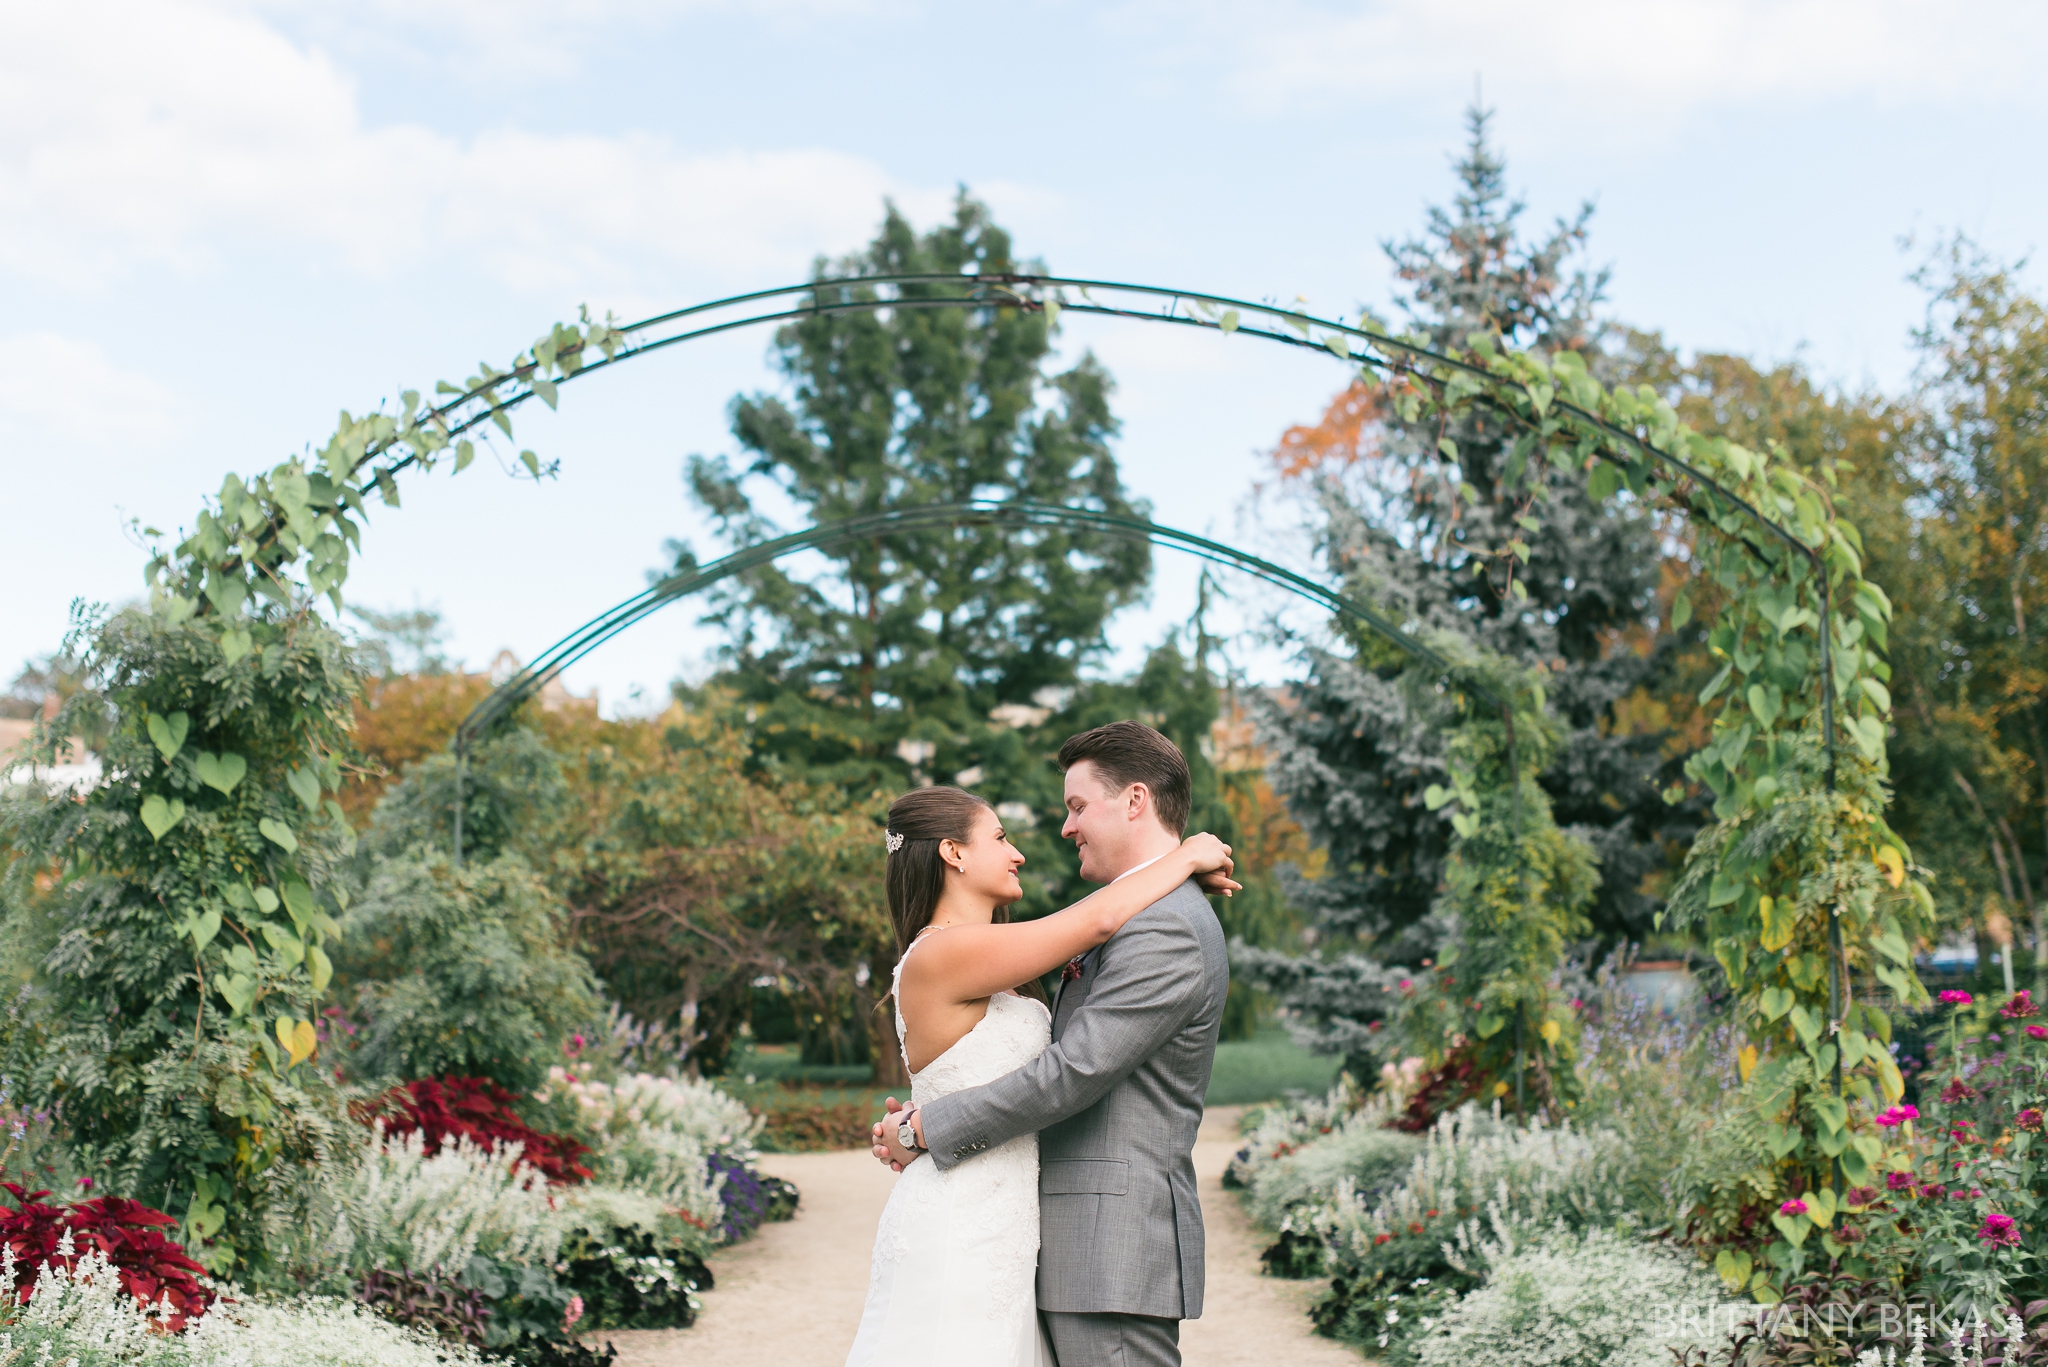 Chicago Wedding Garfield Park Conservatory Wedding Photos - Brittany Bekas Photography_0028